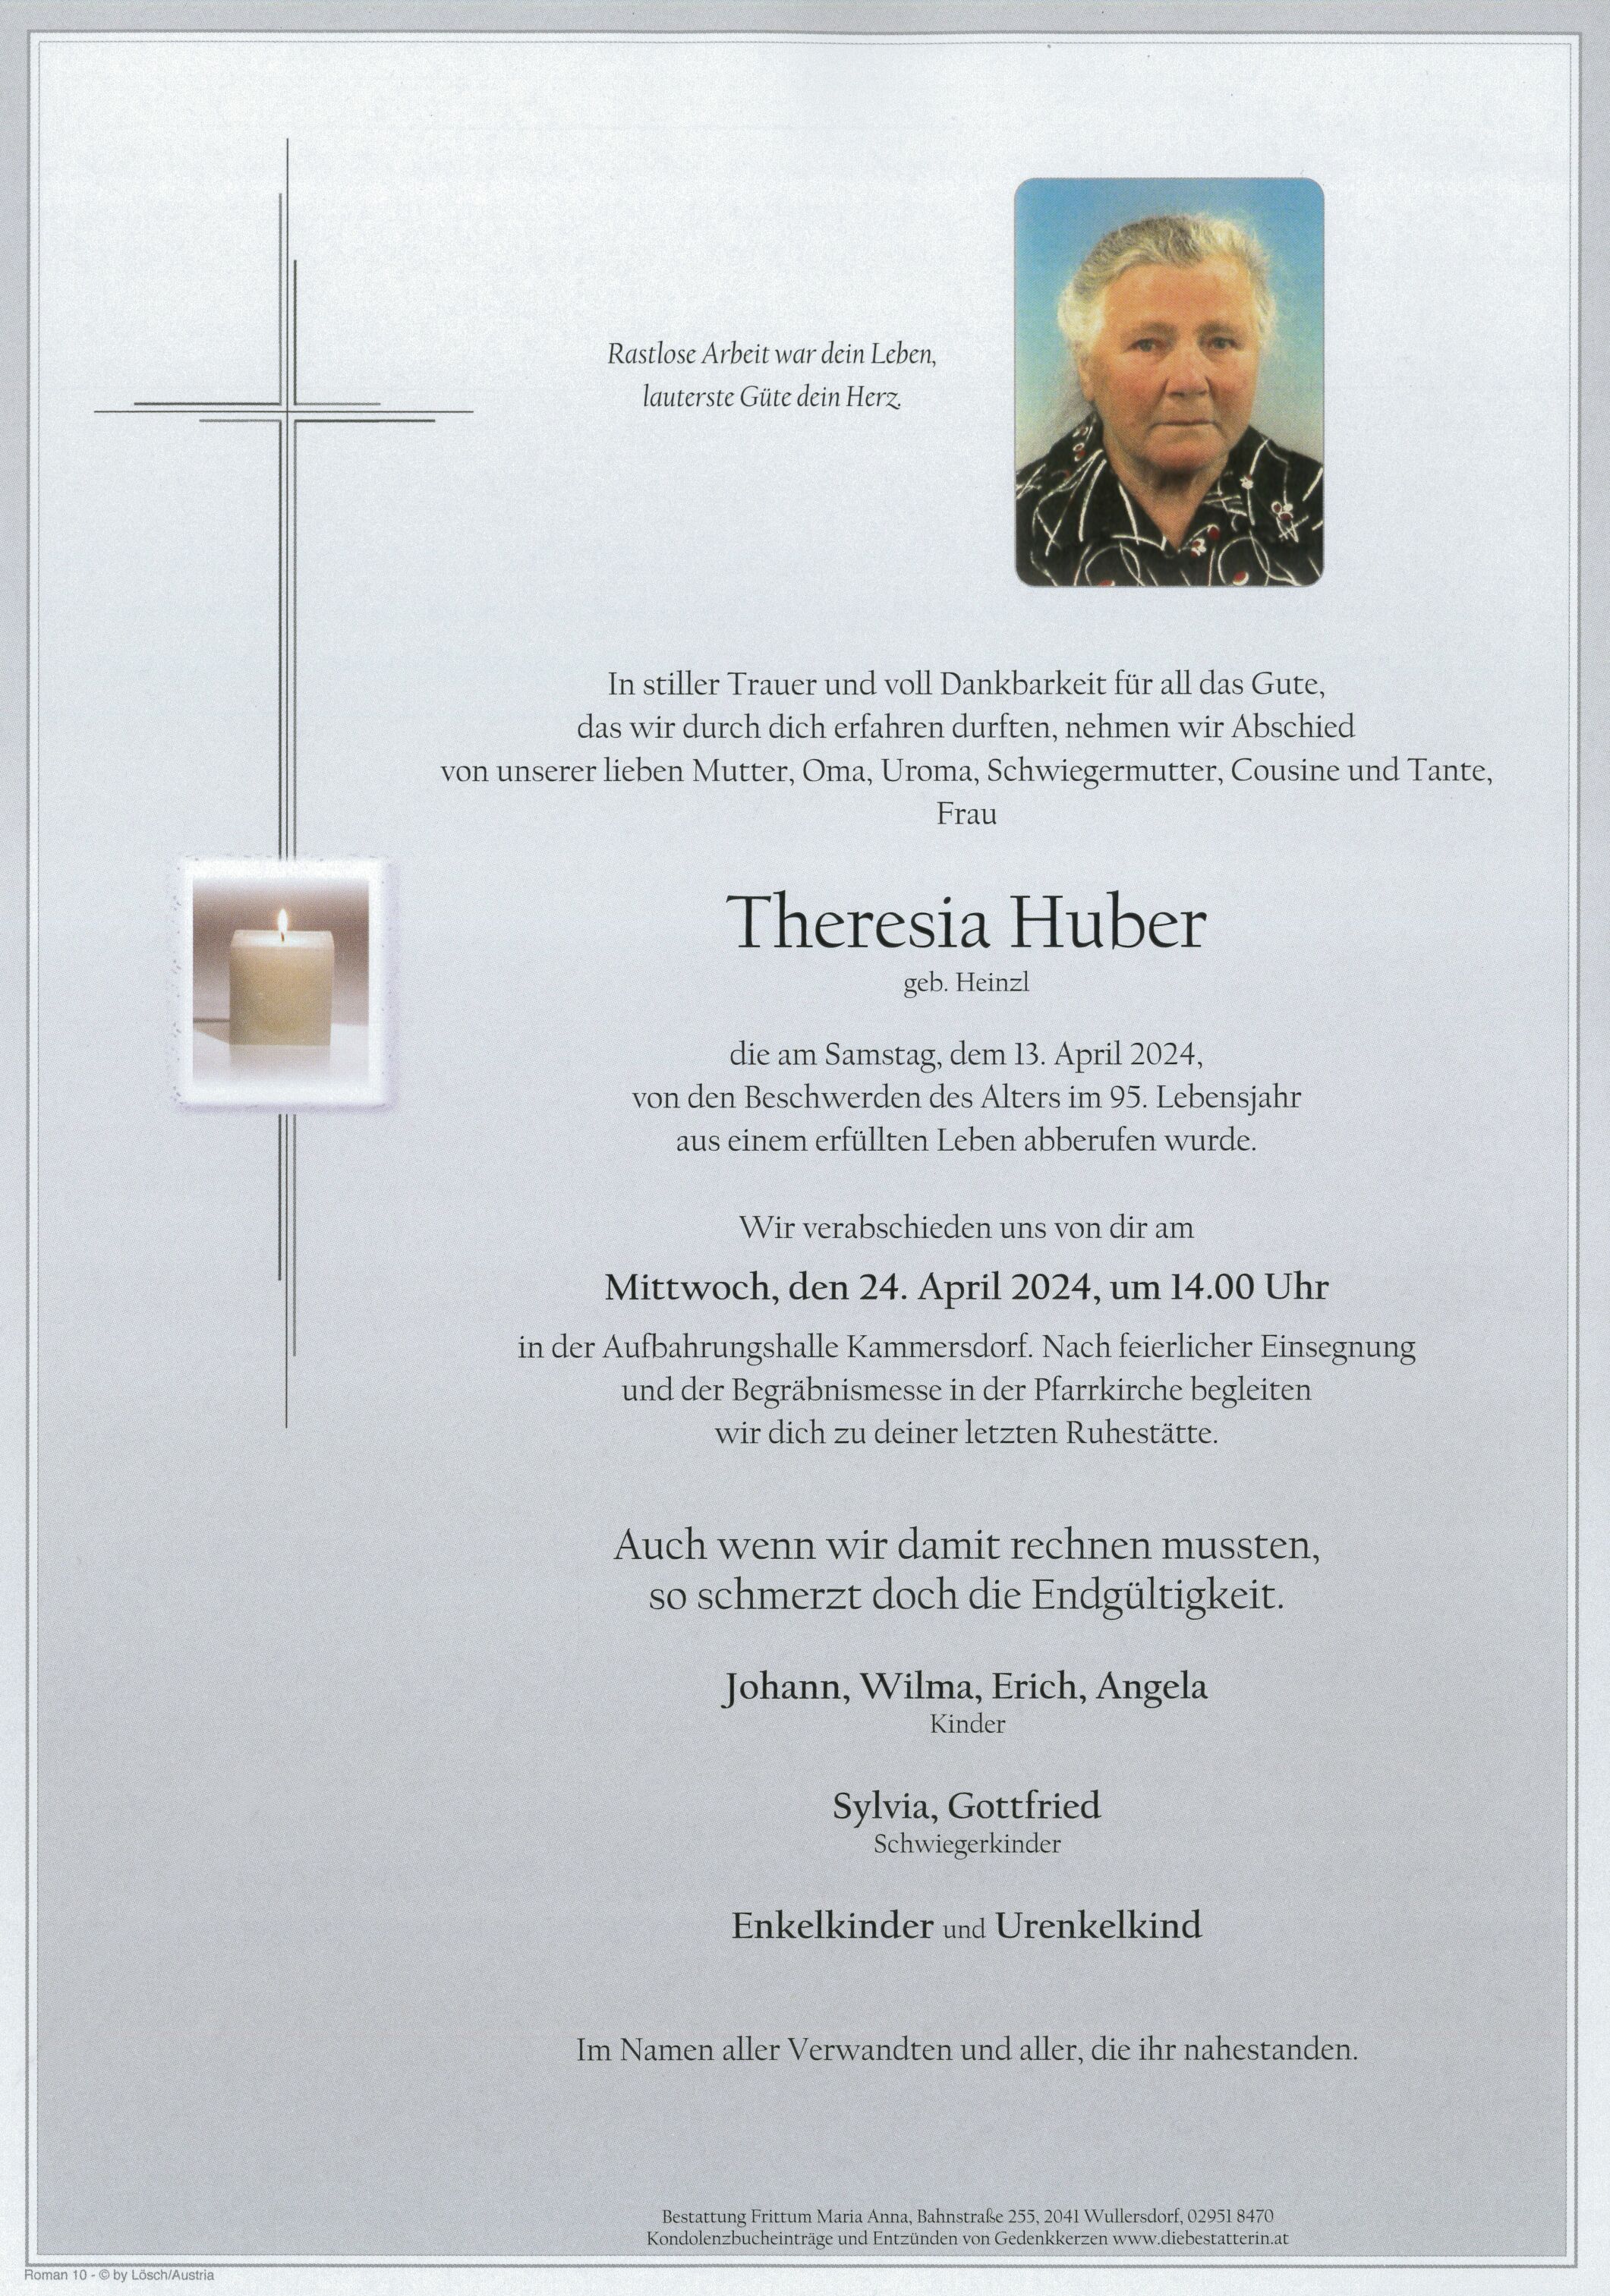 Theresia Huber